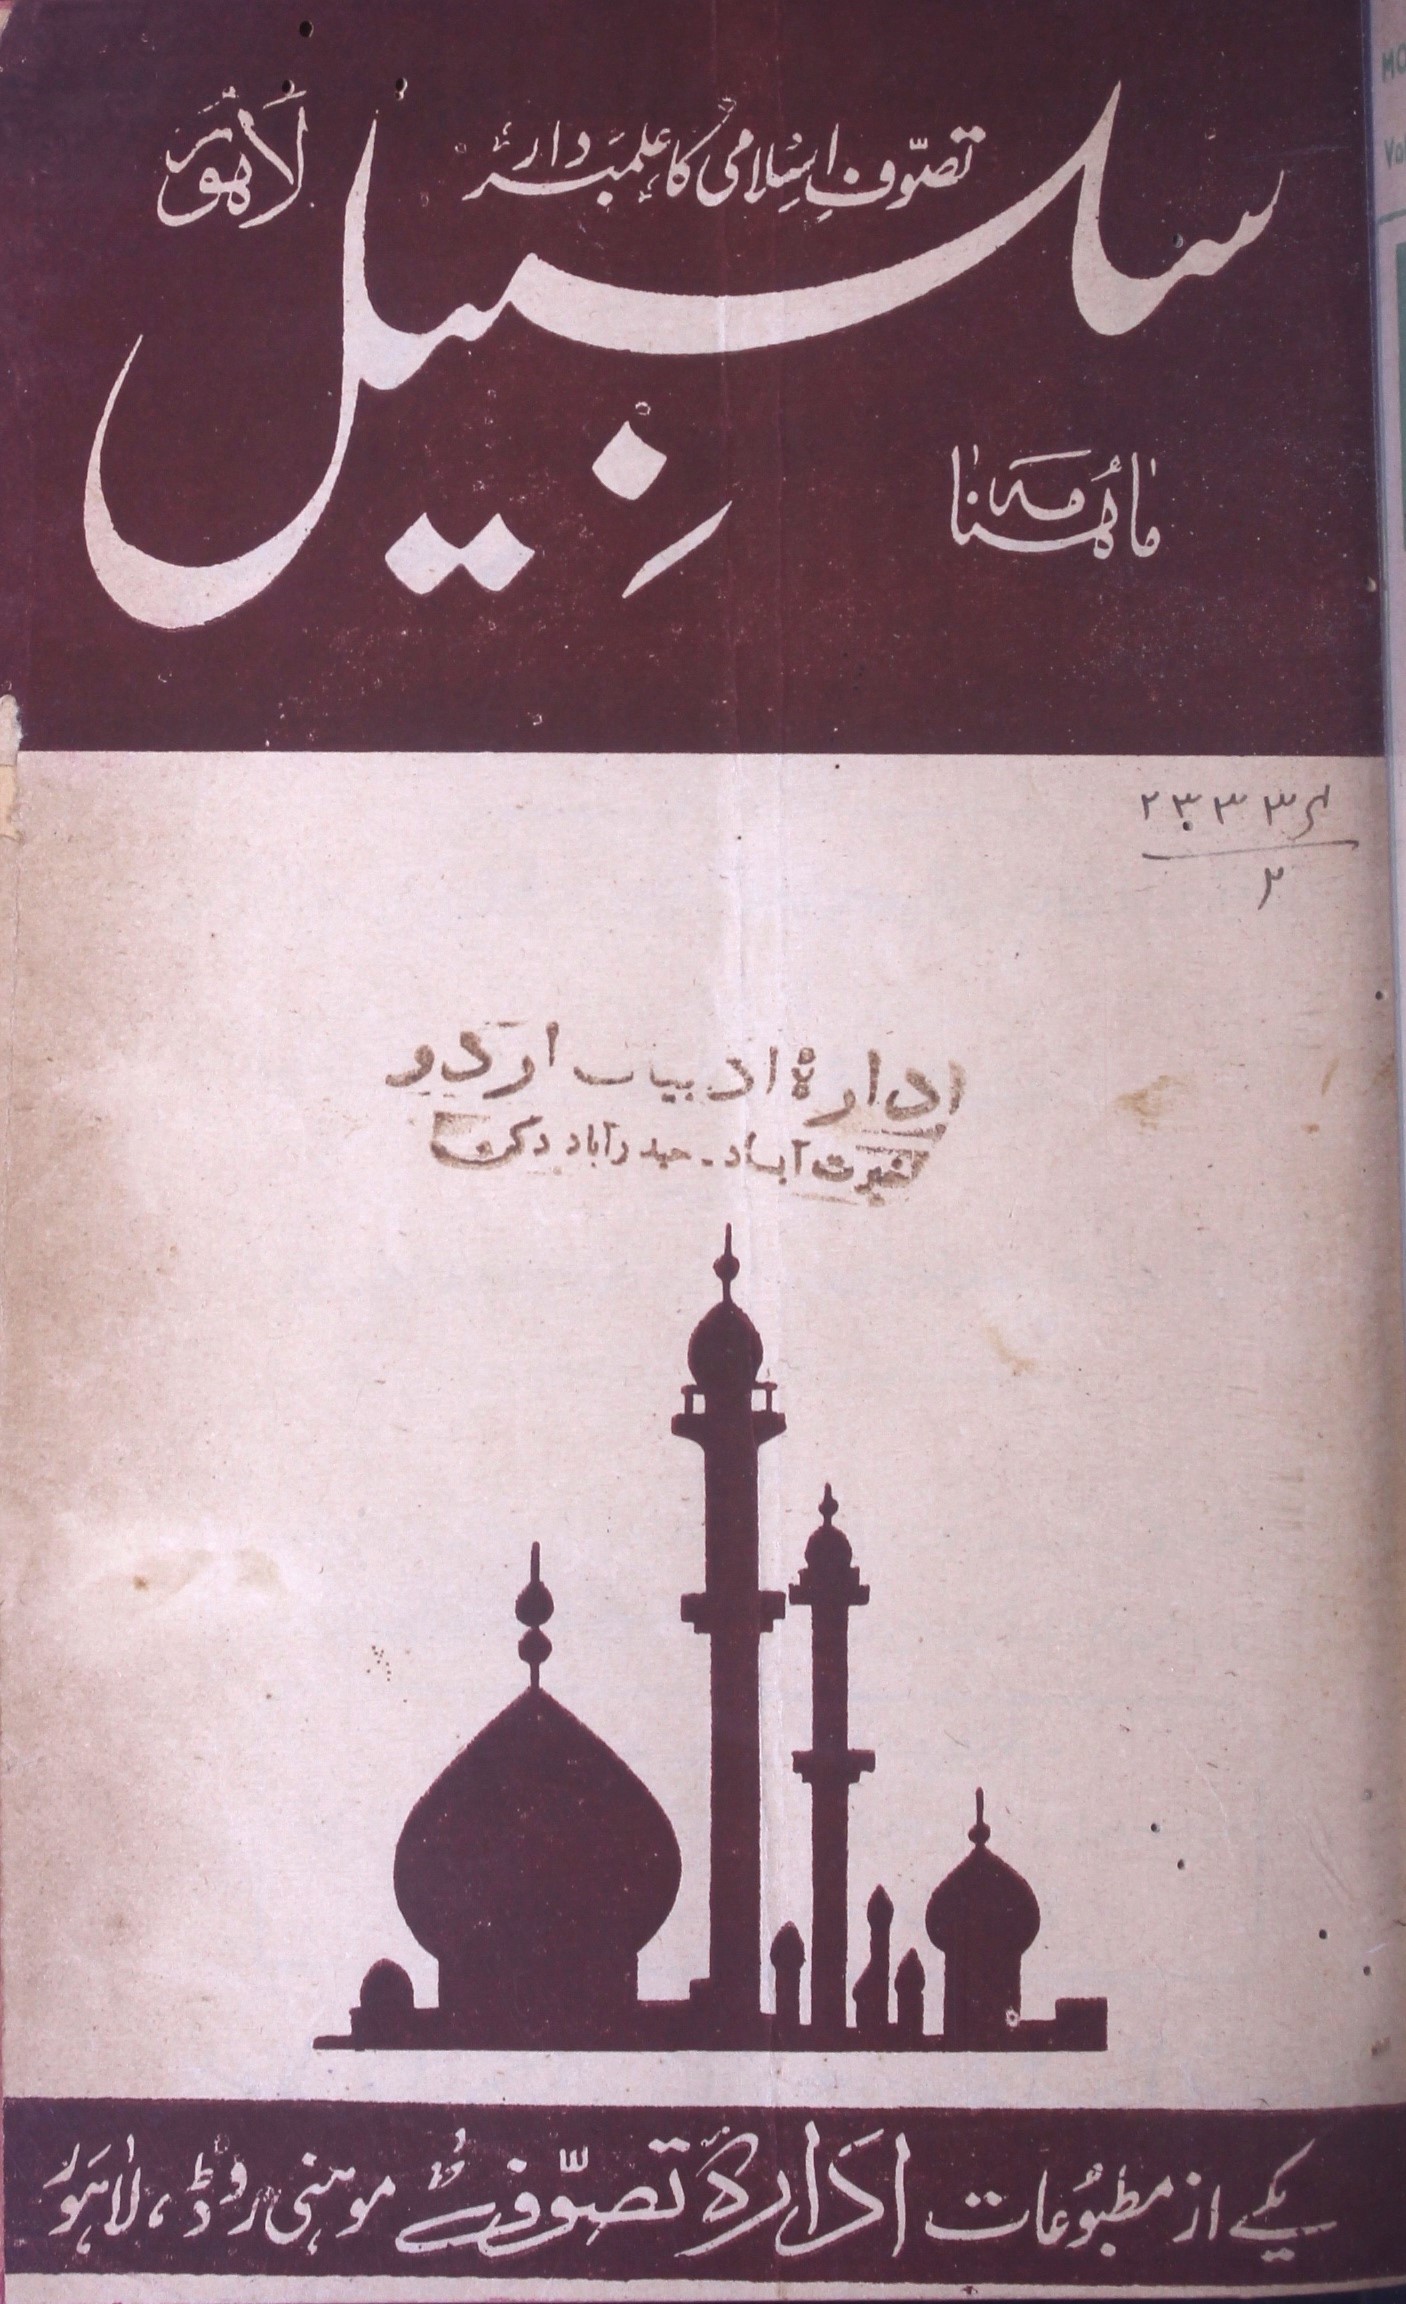 Salsabeel Jild 4 Sh. 3 April 1966